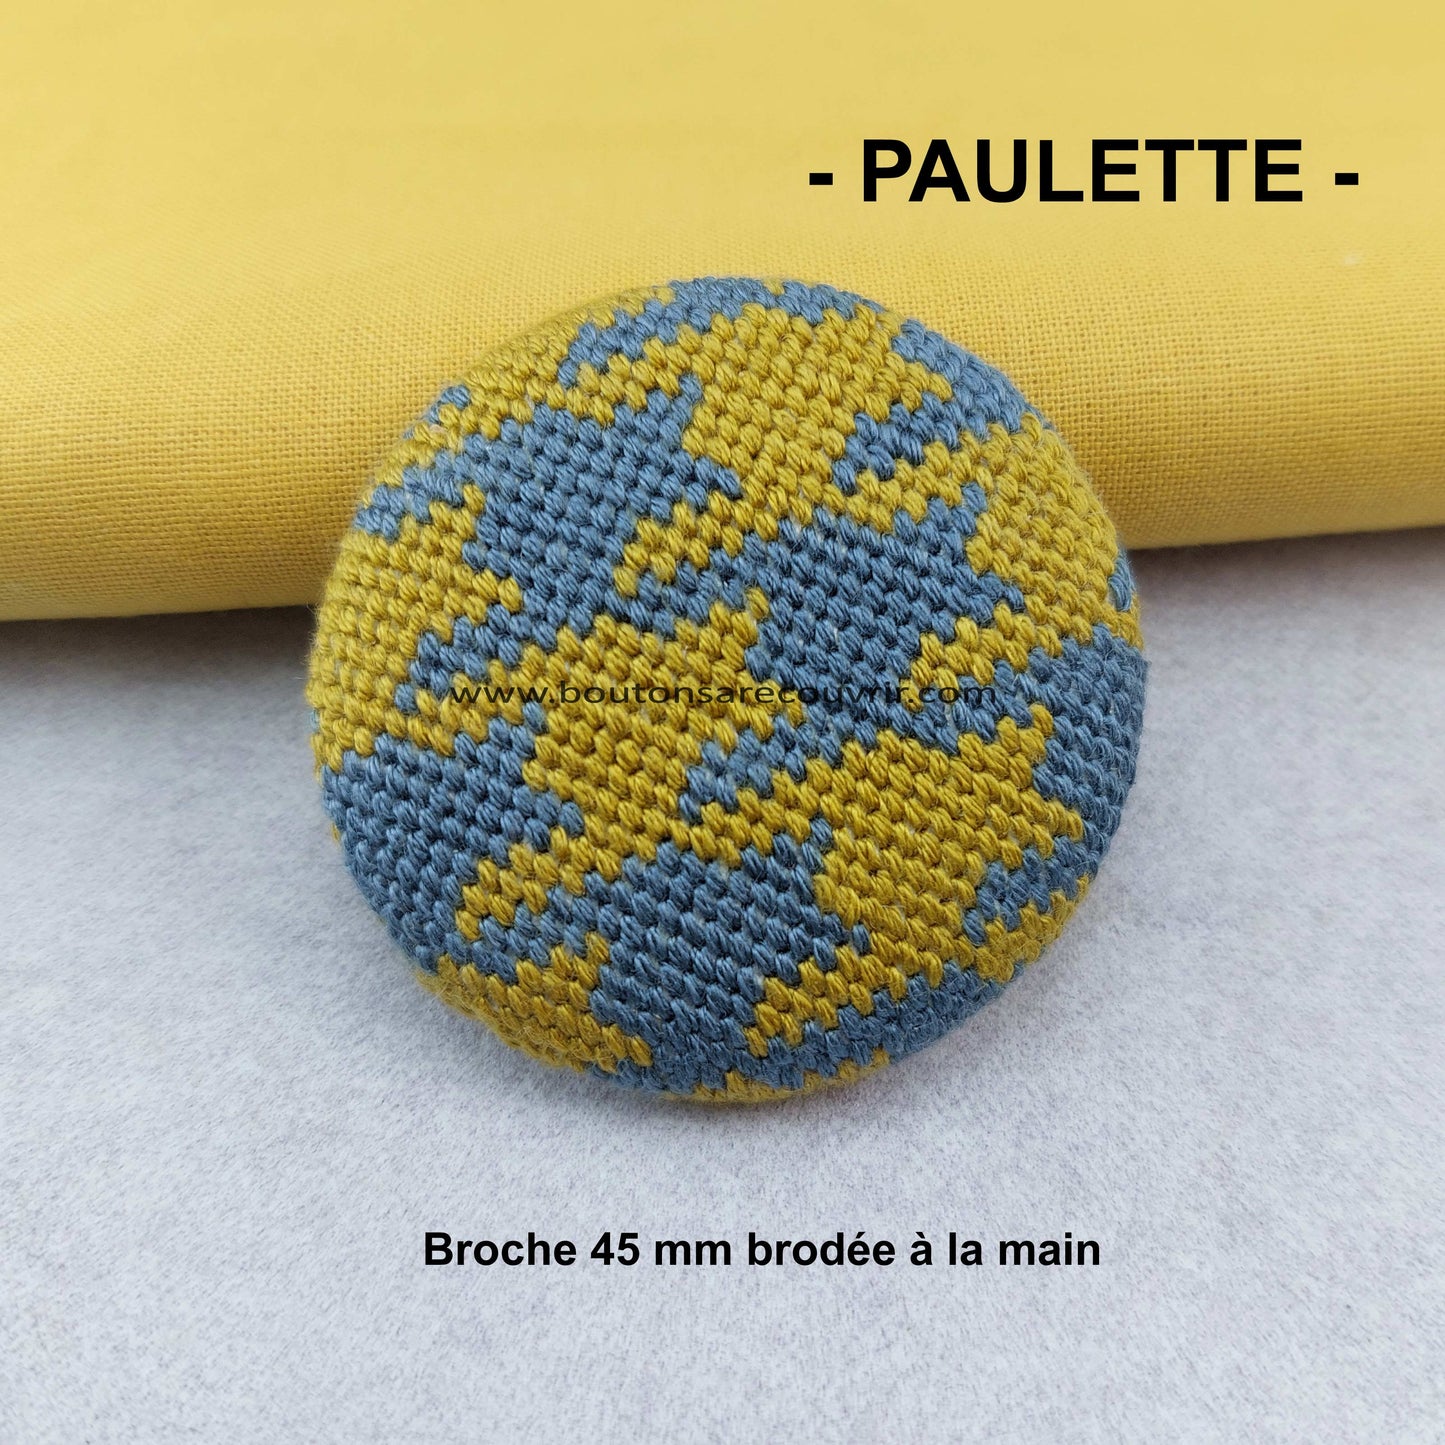 PAULETTE | Broche brodée 45 mm